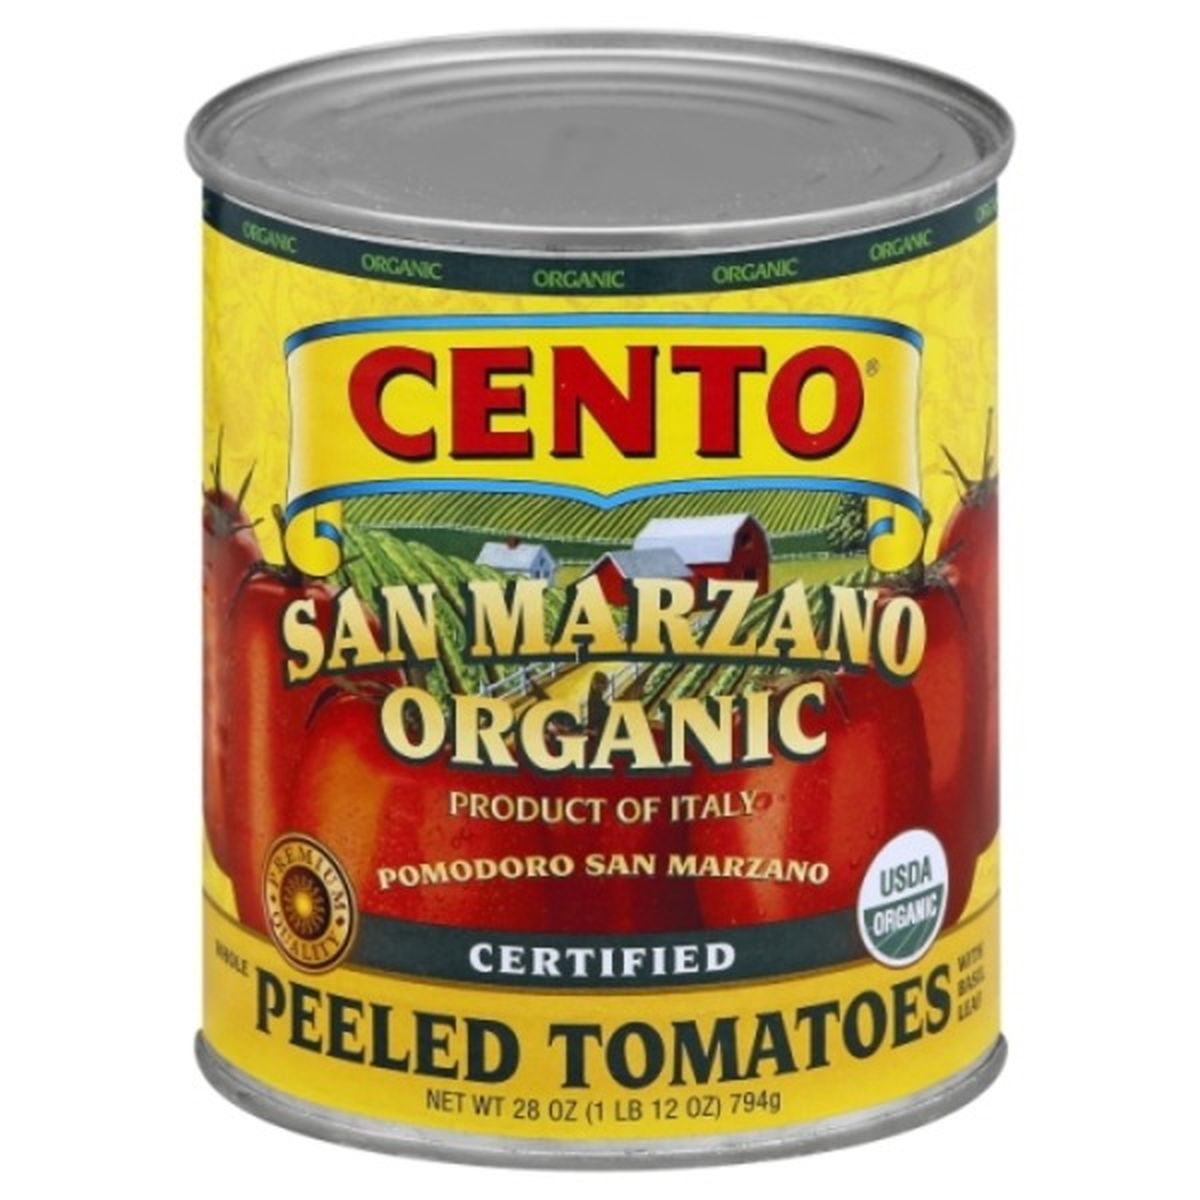 Calories in Cento Tomatoes, Organic, San Marzano, Whole Peeled